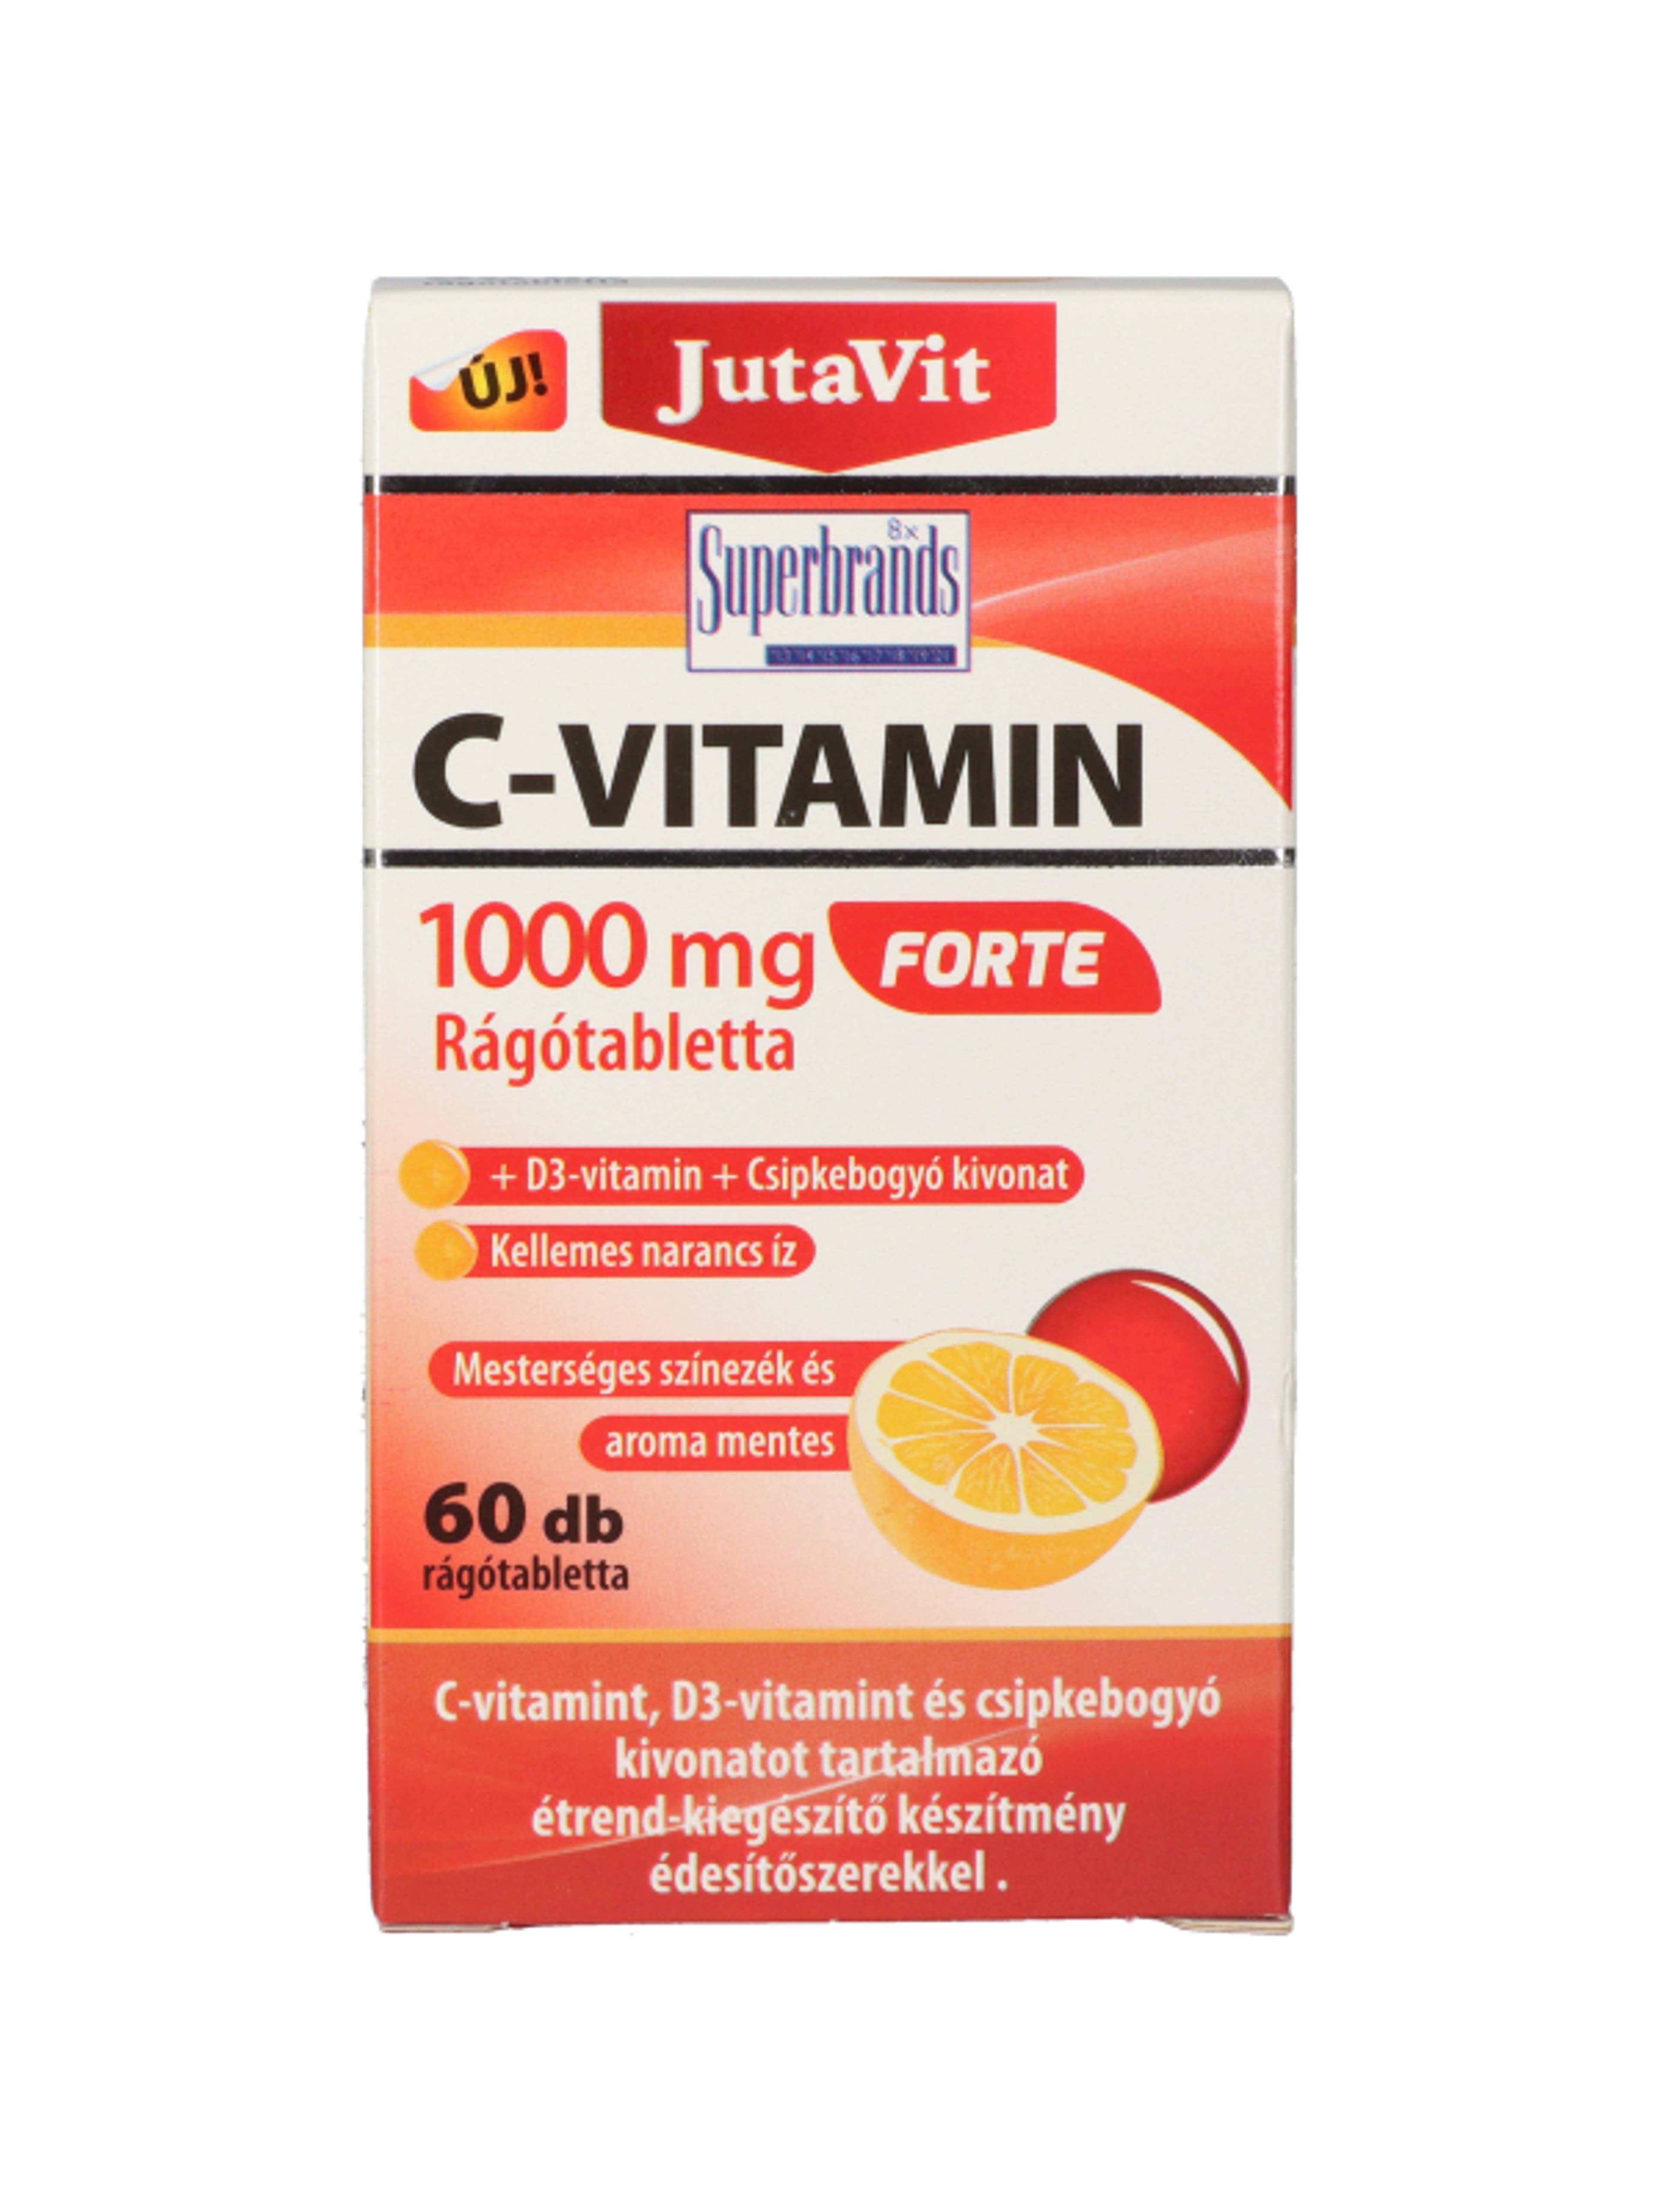 JutaVit C-vitamin Forte 1000 mg étrend-kiegészítő rágótabletta - 60 db